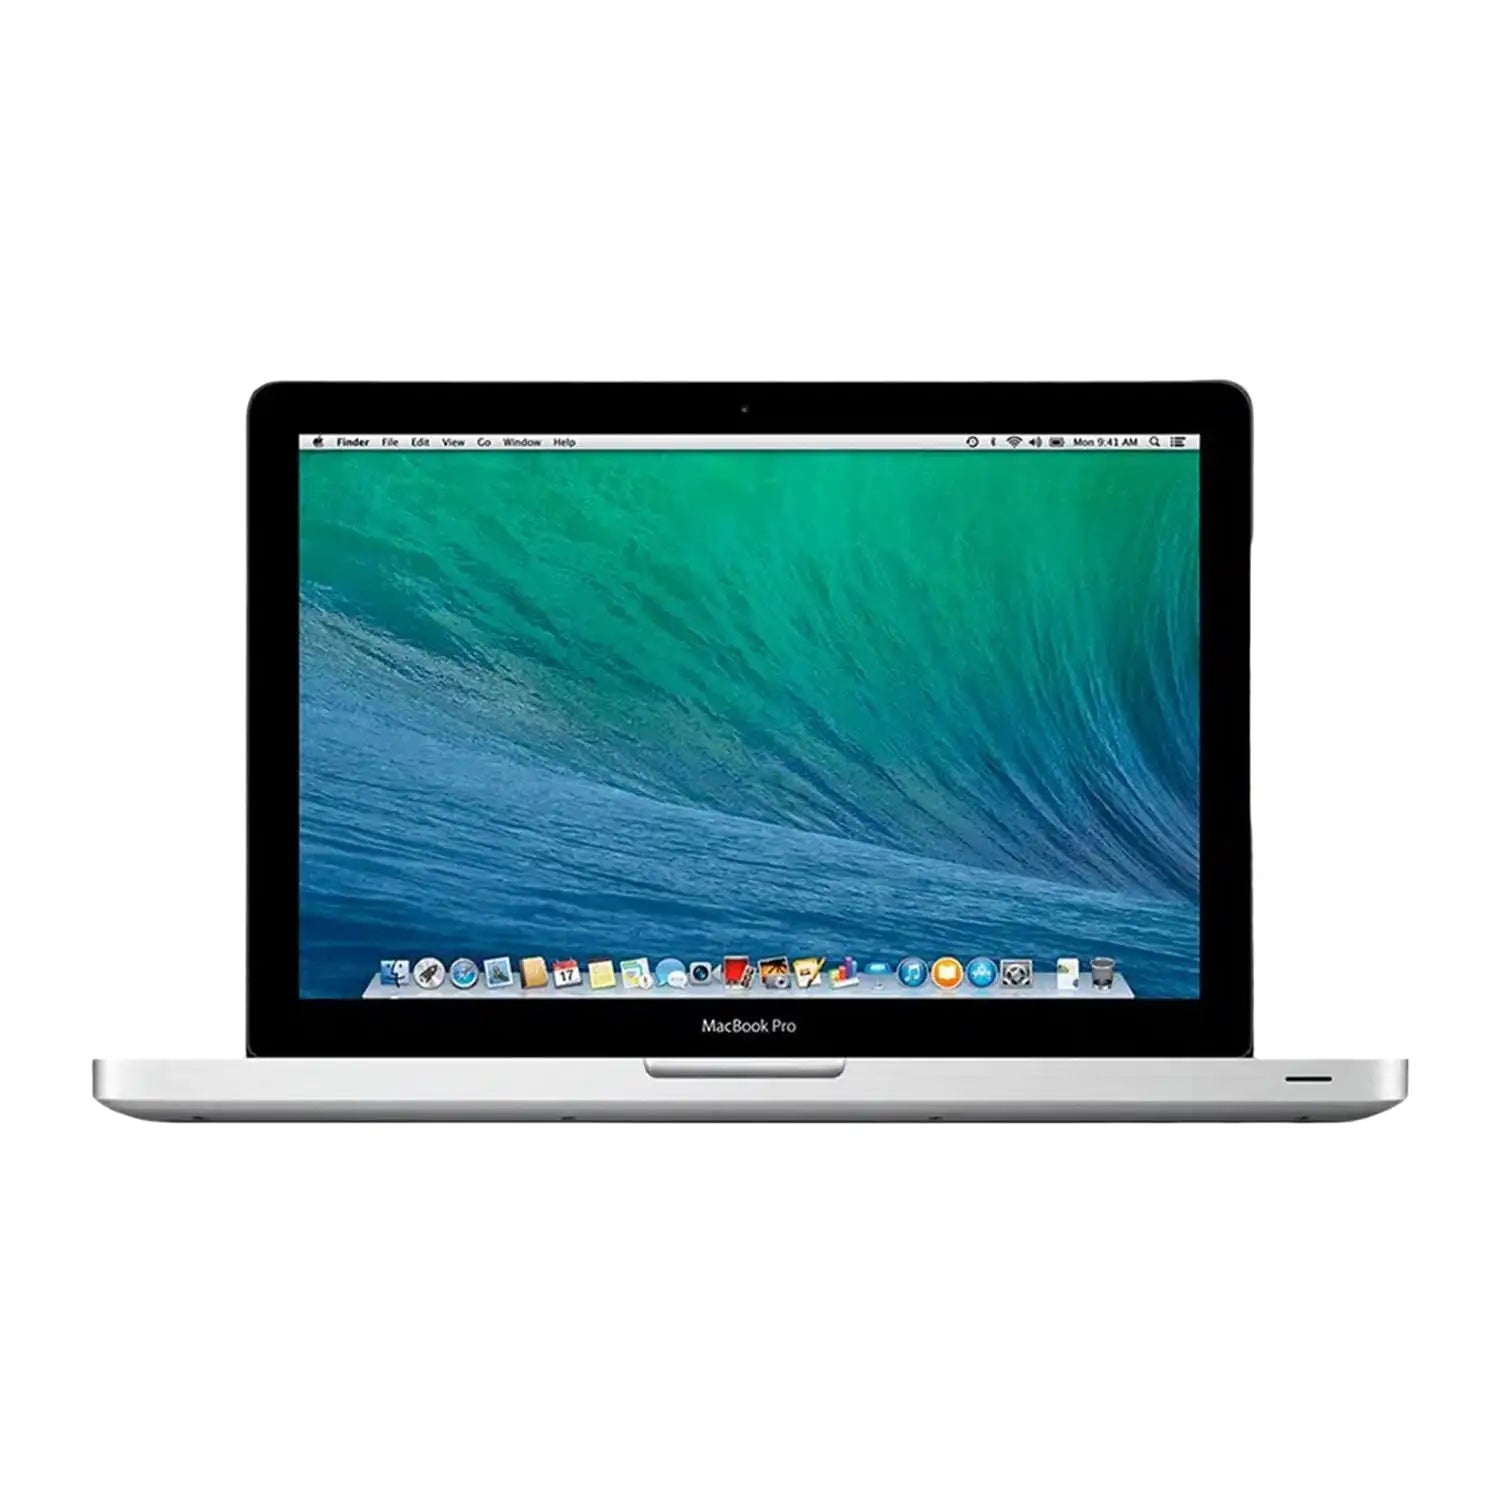 MacBook Pro 15″ (Mid 2012) reparation